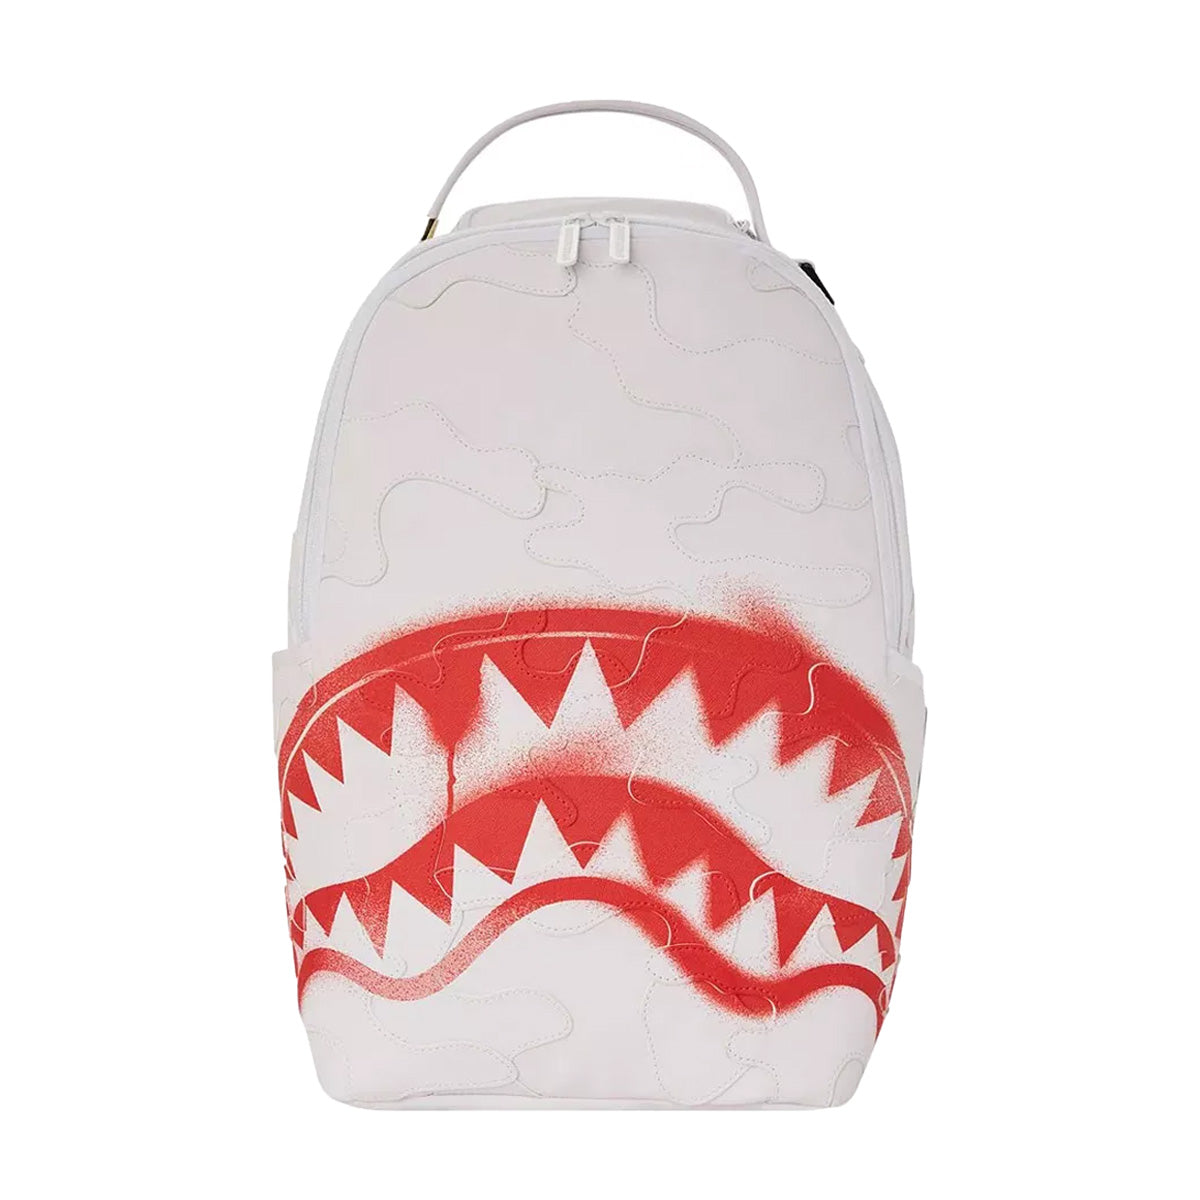 Bape Backpack, Red Bape Backpack ,Waterproof Backpack